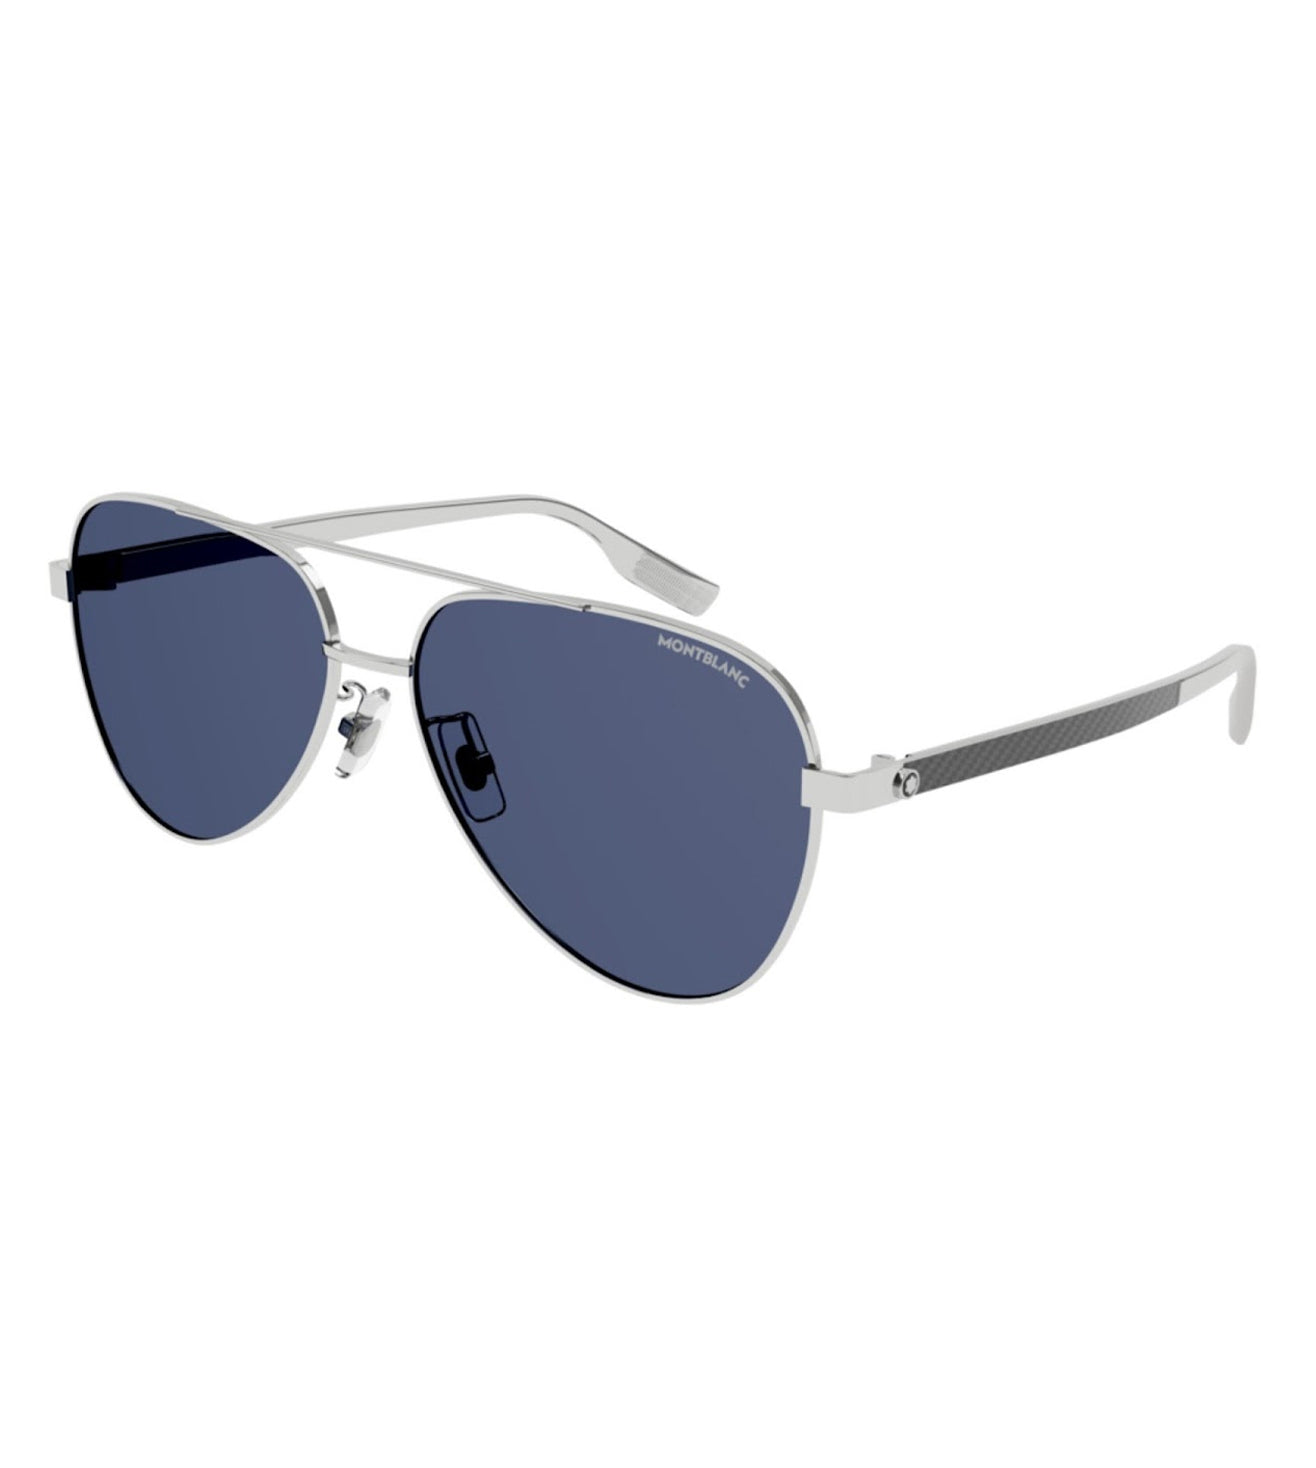 Montblanc Men's Blue Aviator Sunglasses